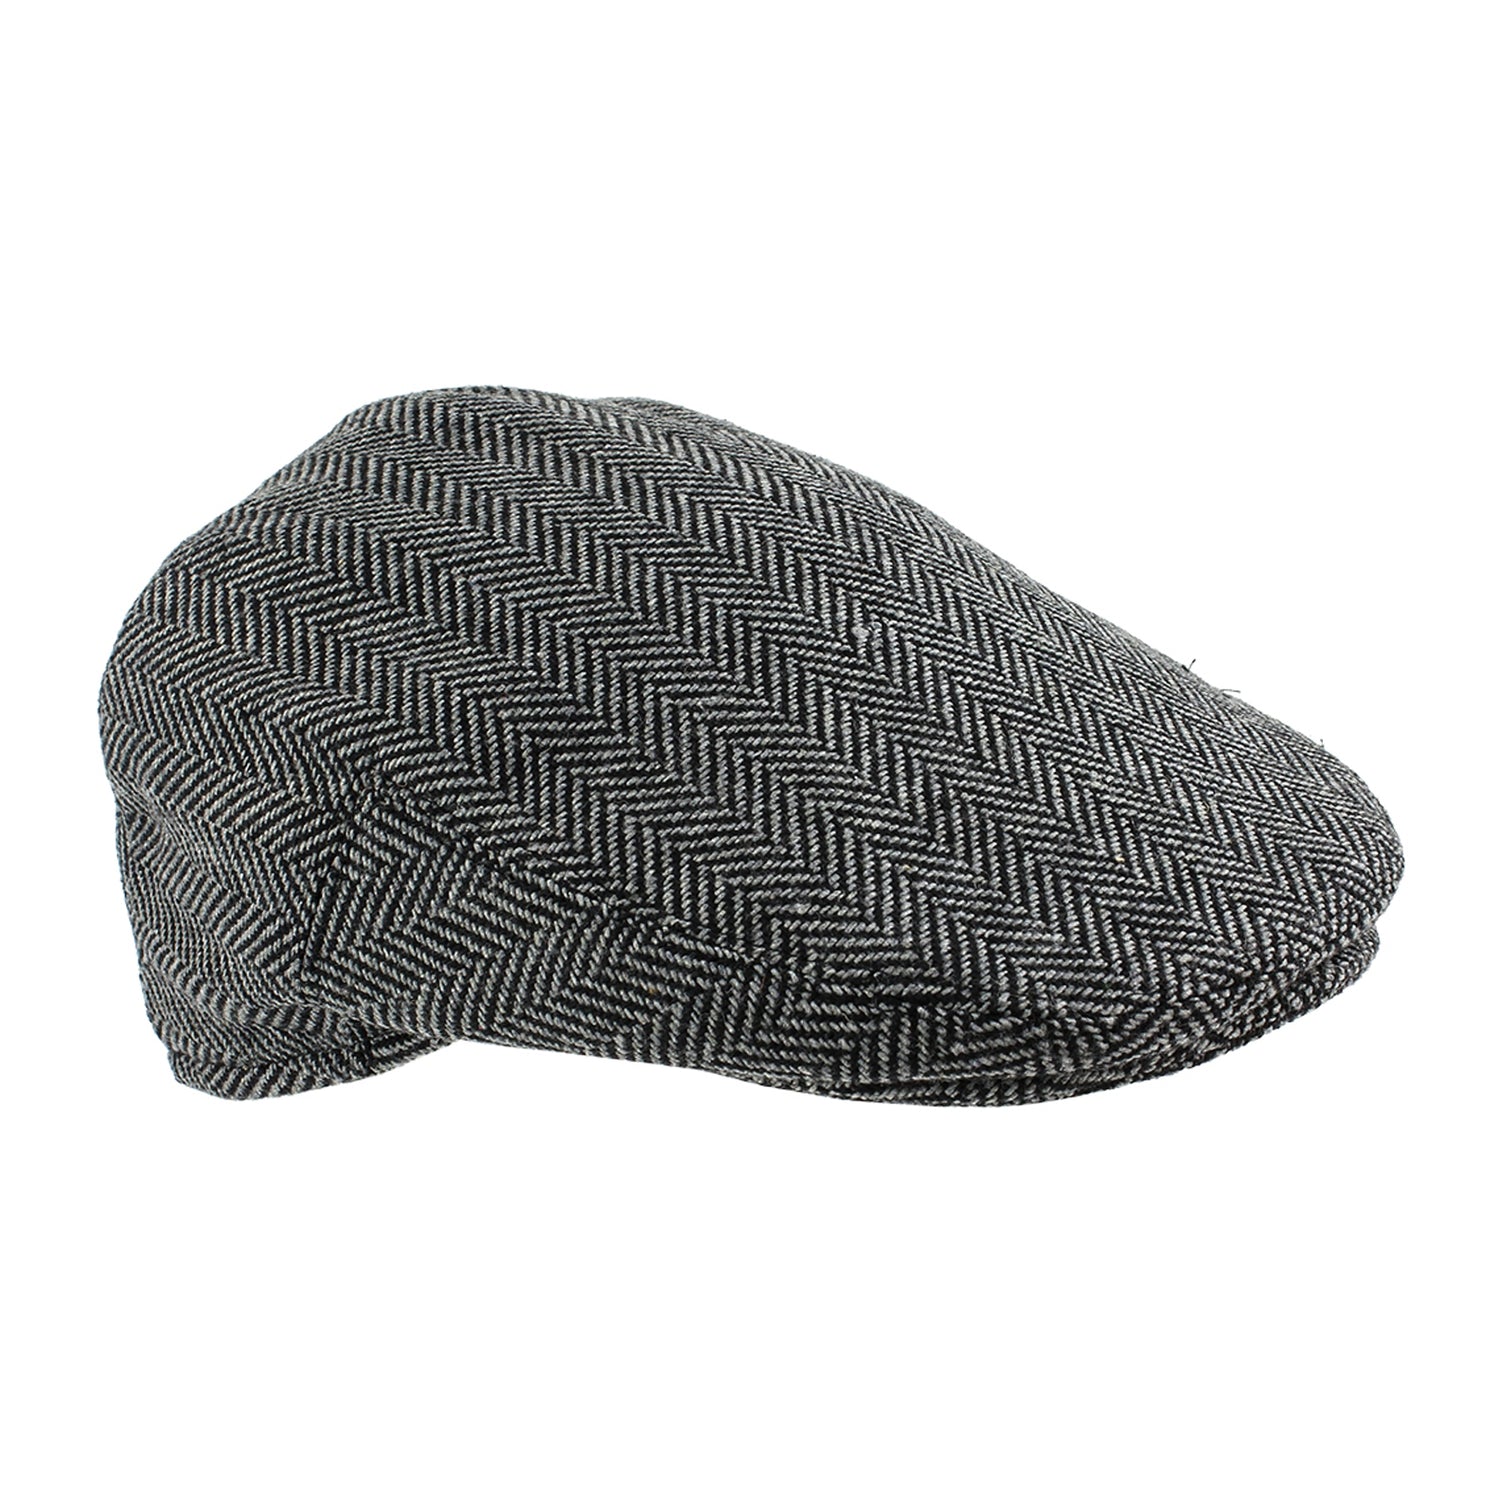 British Bag Co. Grey Herringbone Flat Cap